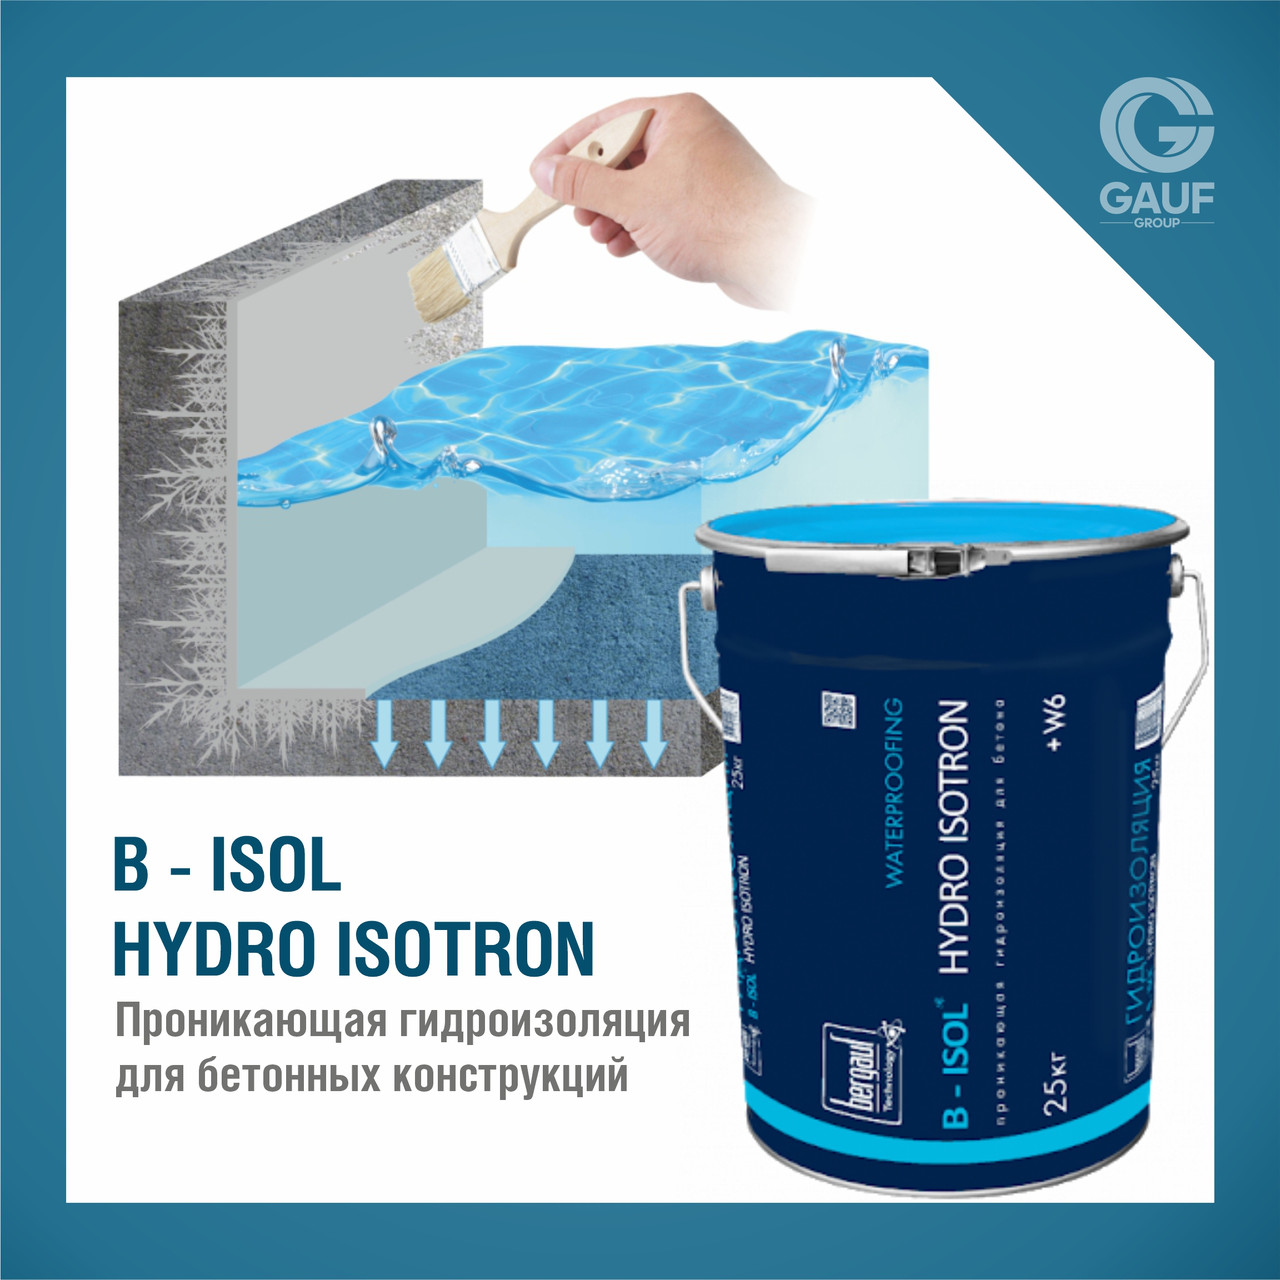 B - ISOL HYDRO ISOTRON, Проникающая гидроизоляция для бетонных конструкций, ведро 25 кг